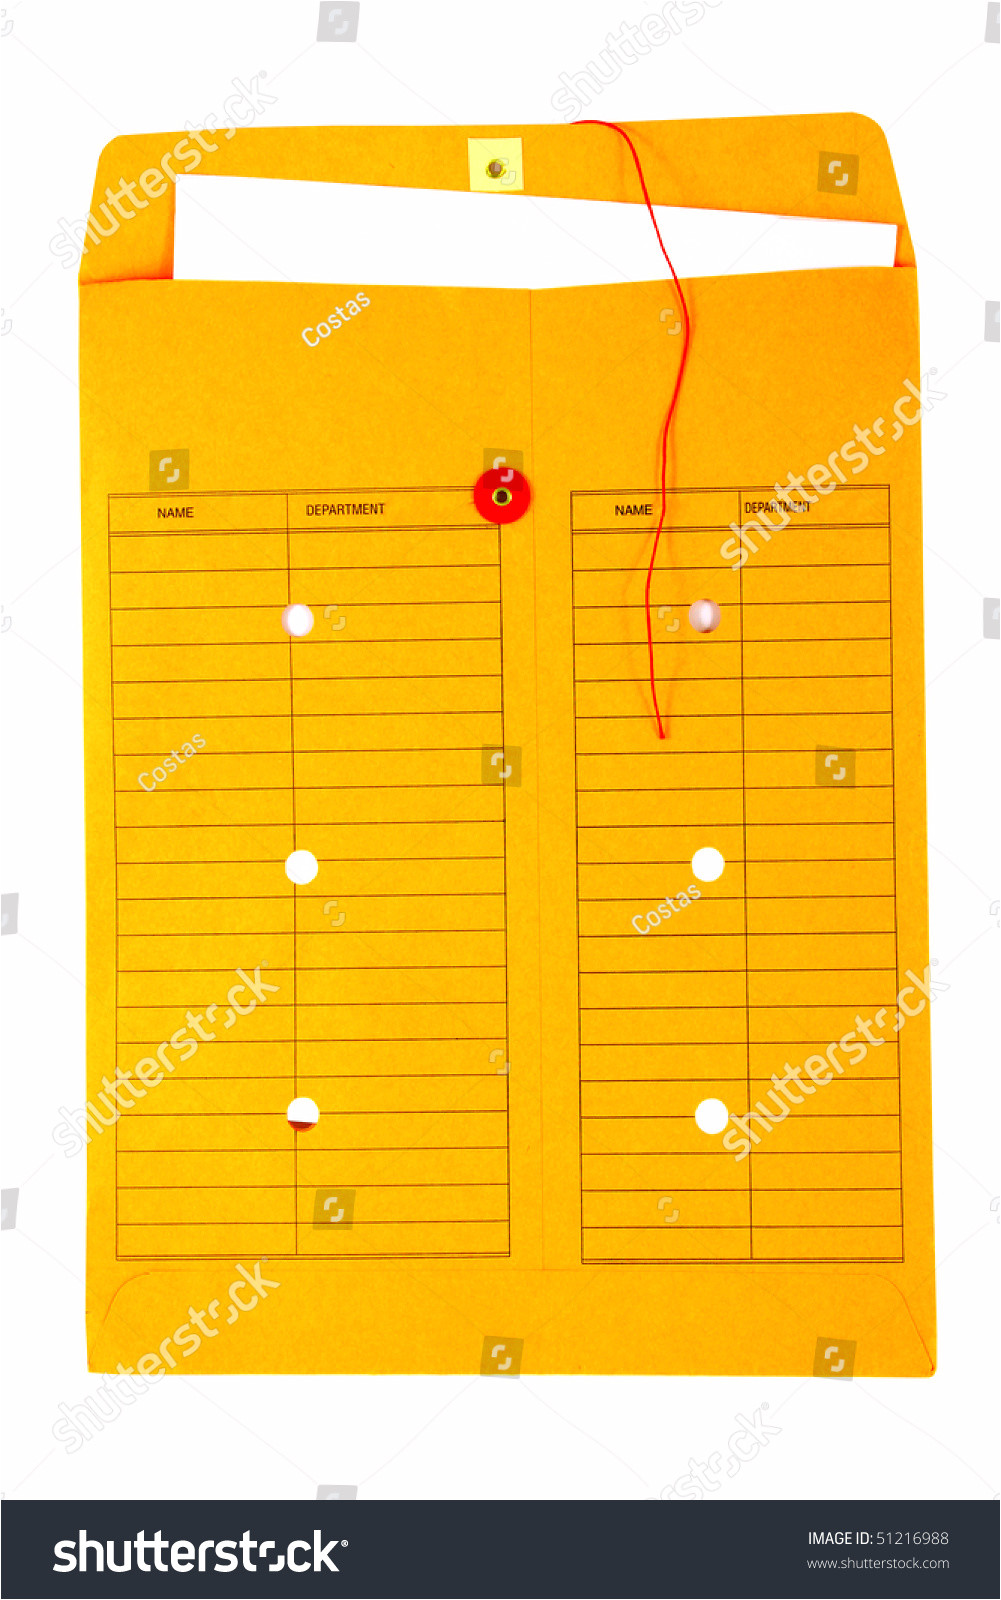 stock photo yellow inter office envelope